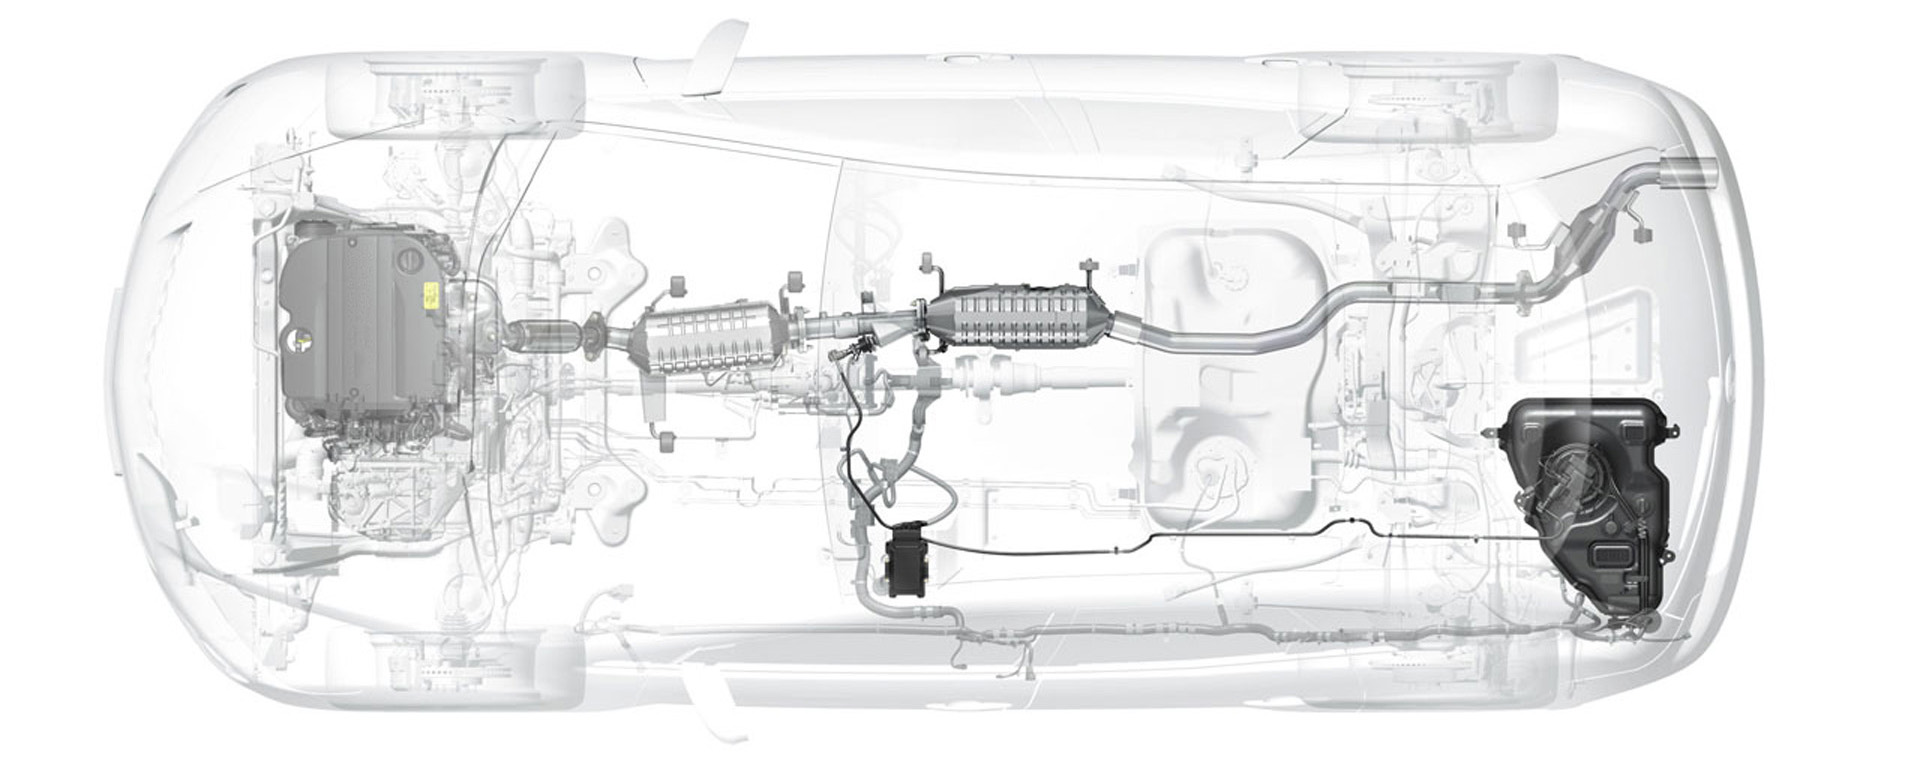 El catalizador patentado por Koenigsegg consigue unos 300 CV extra